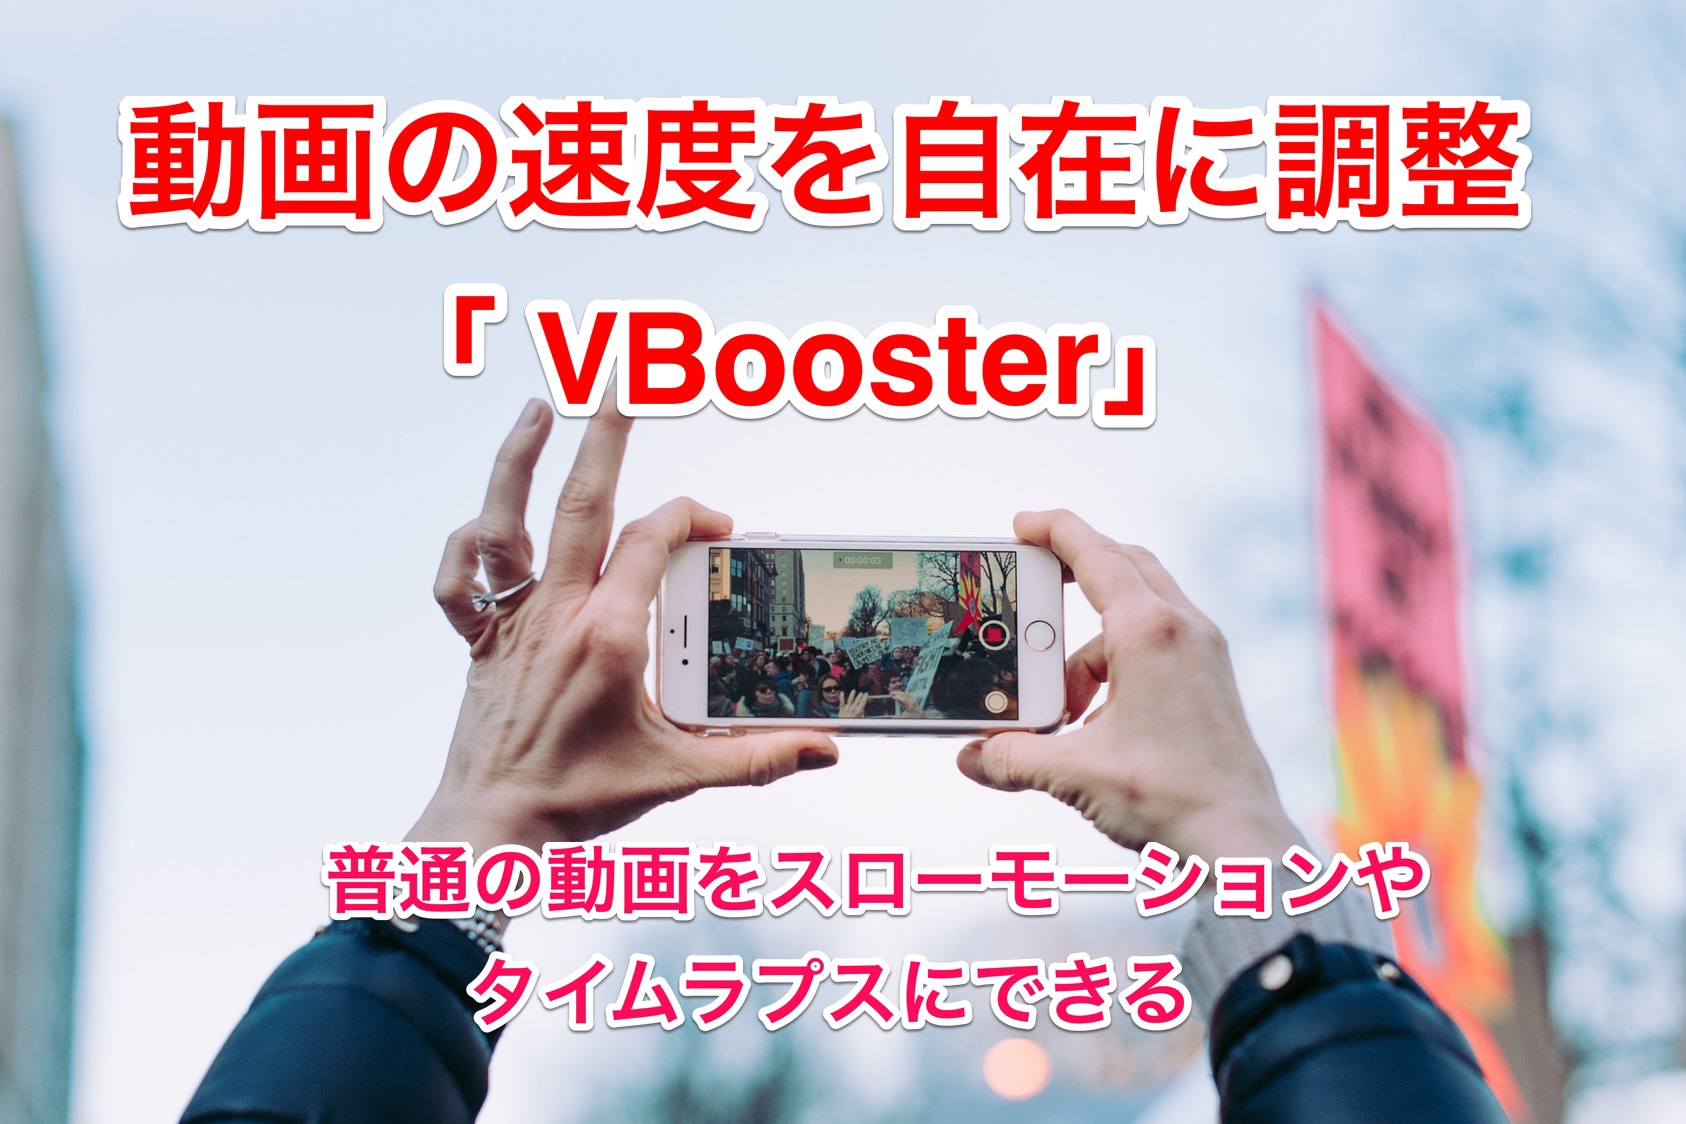 Vbooster 速度を自在に調整 普通の動画をスローモーションや